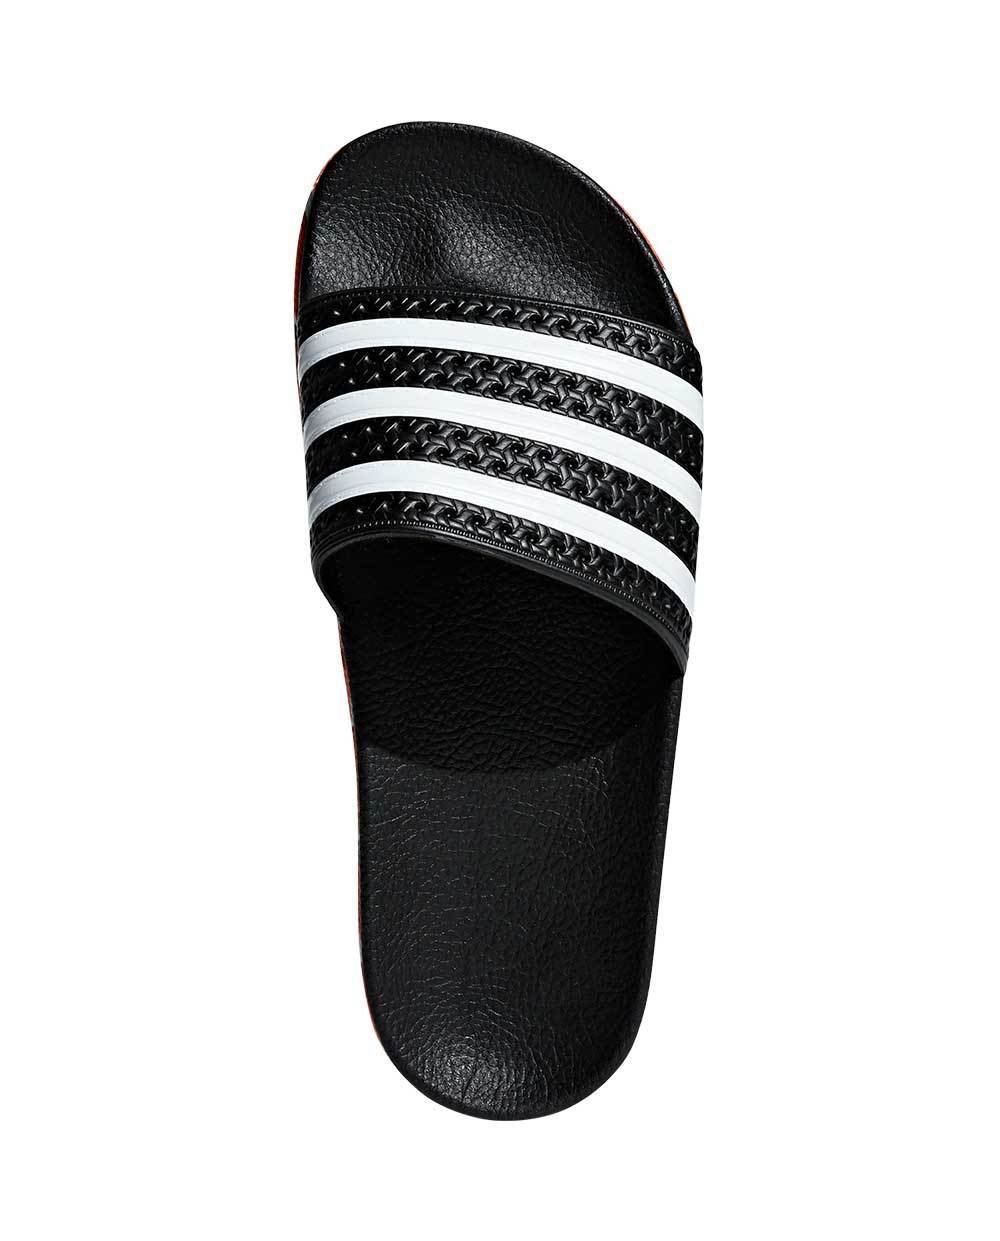 Adidas Adilette New Bold Black and White